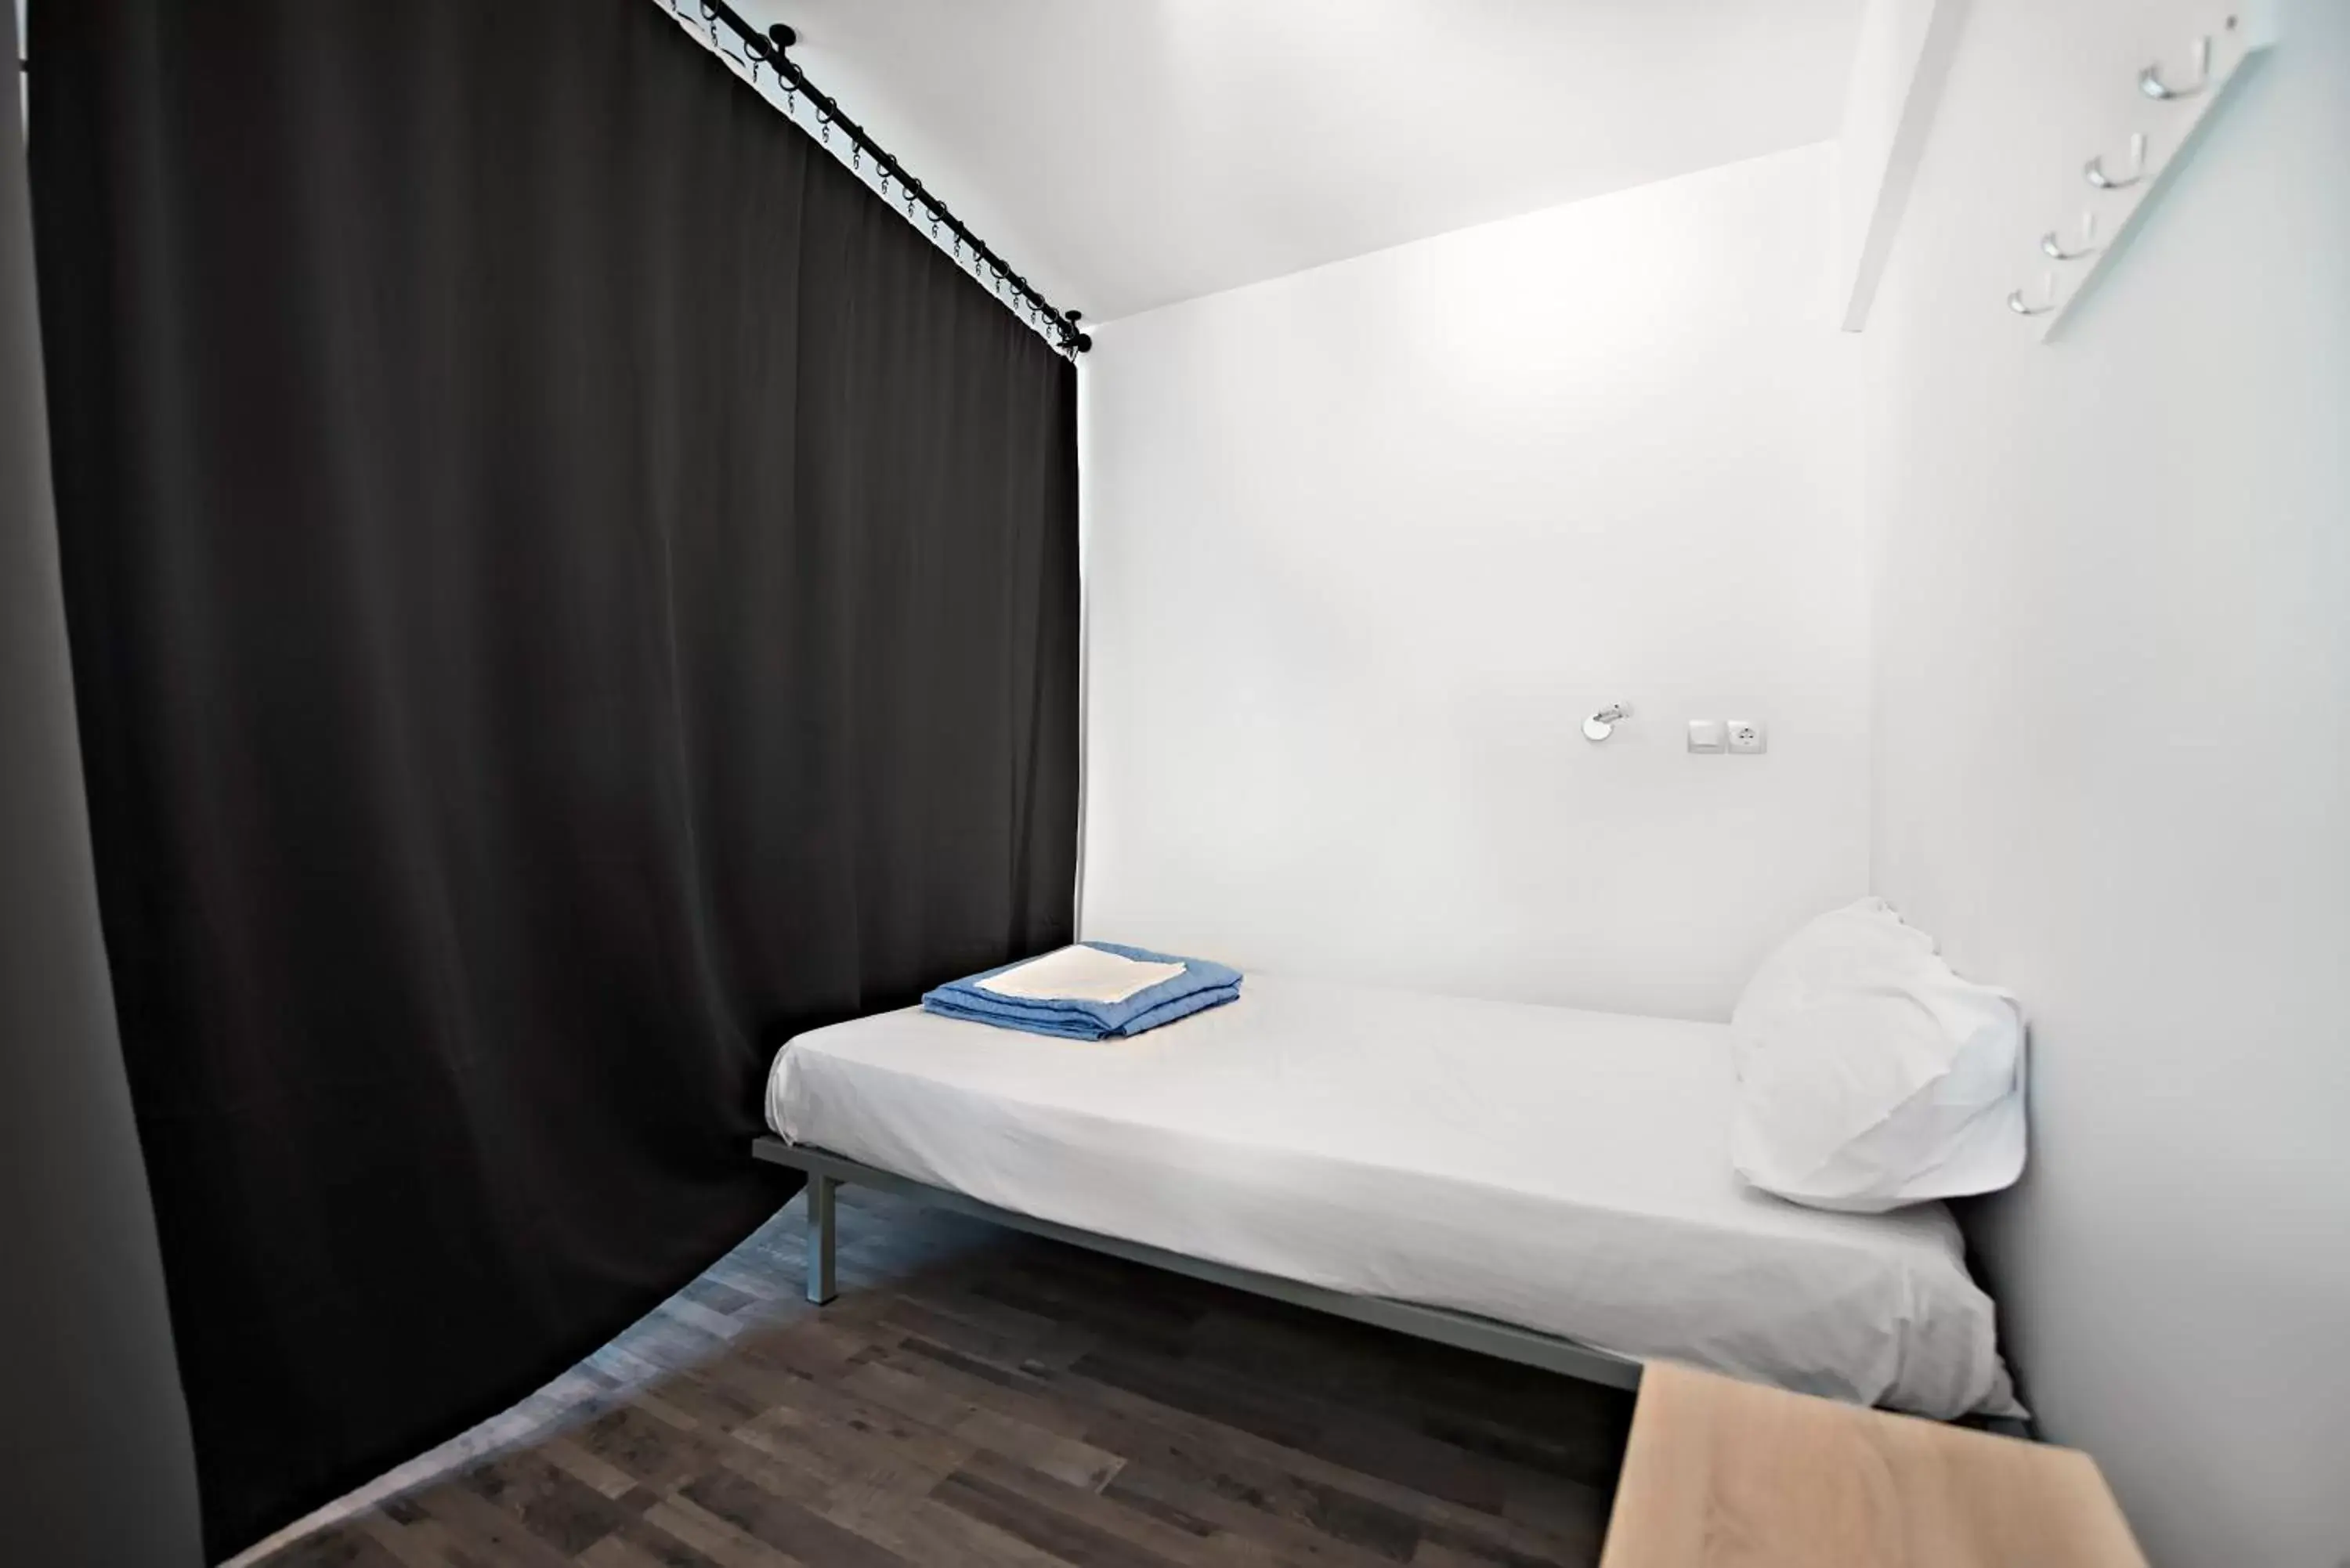 Bed in Bedbox Hostel